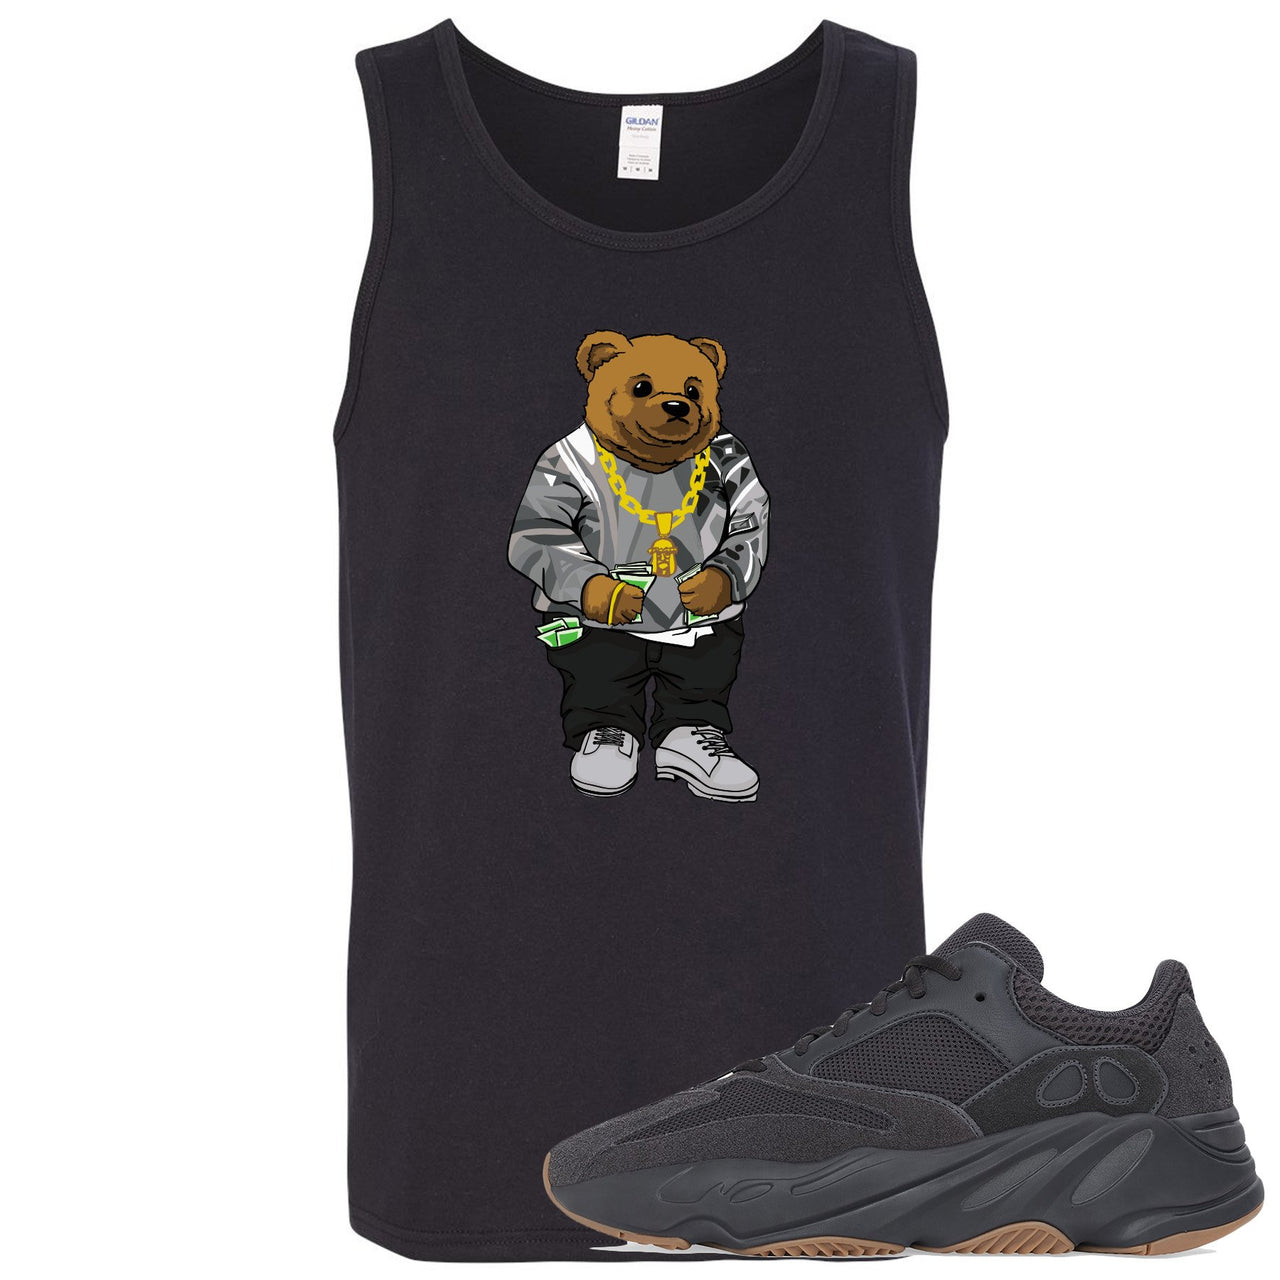 Yeezy Boost 700 Utility Black Sneaker Hook Up Sweater Bear Black Mens Tank Top